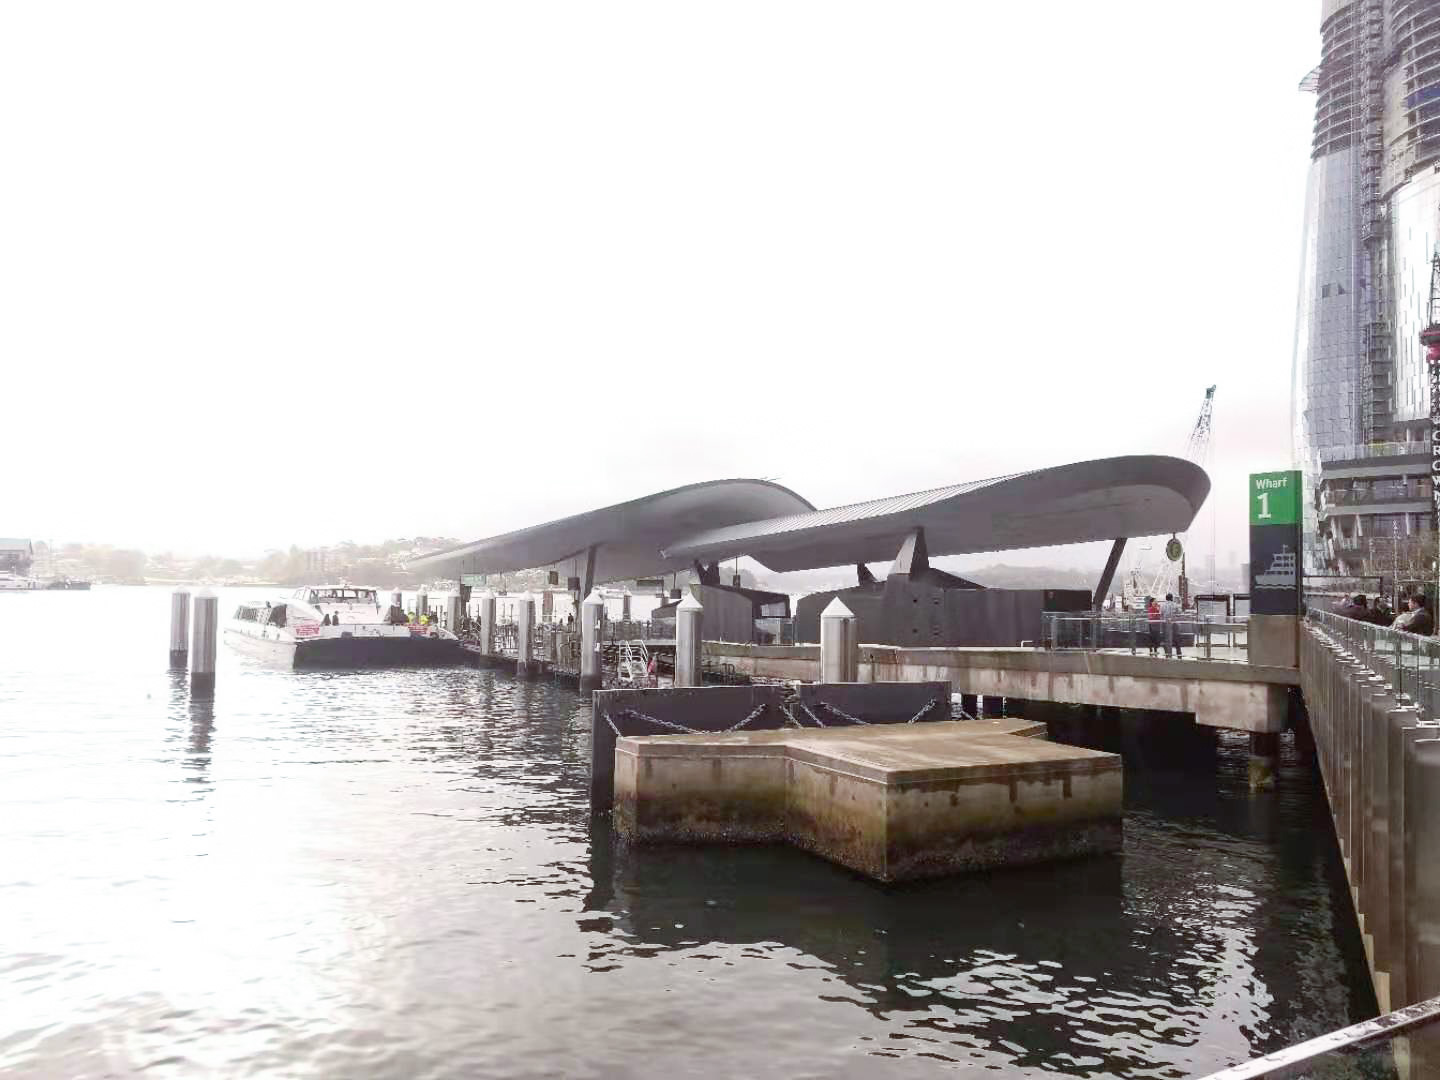 码头钢结构设施-mmexport1574653481037